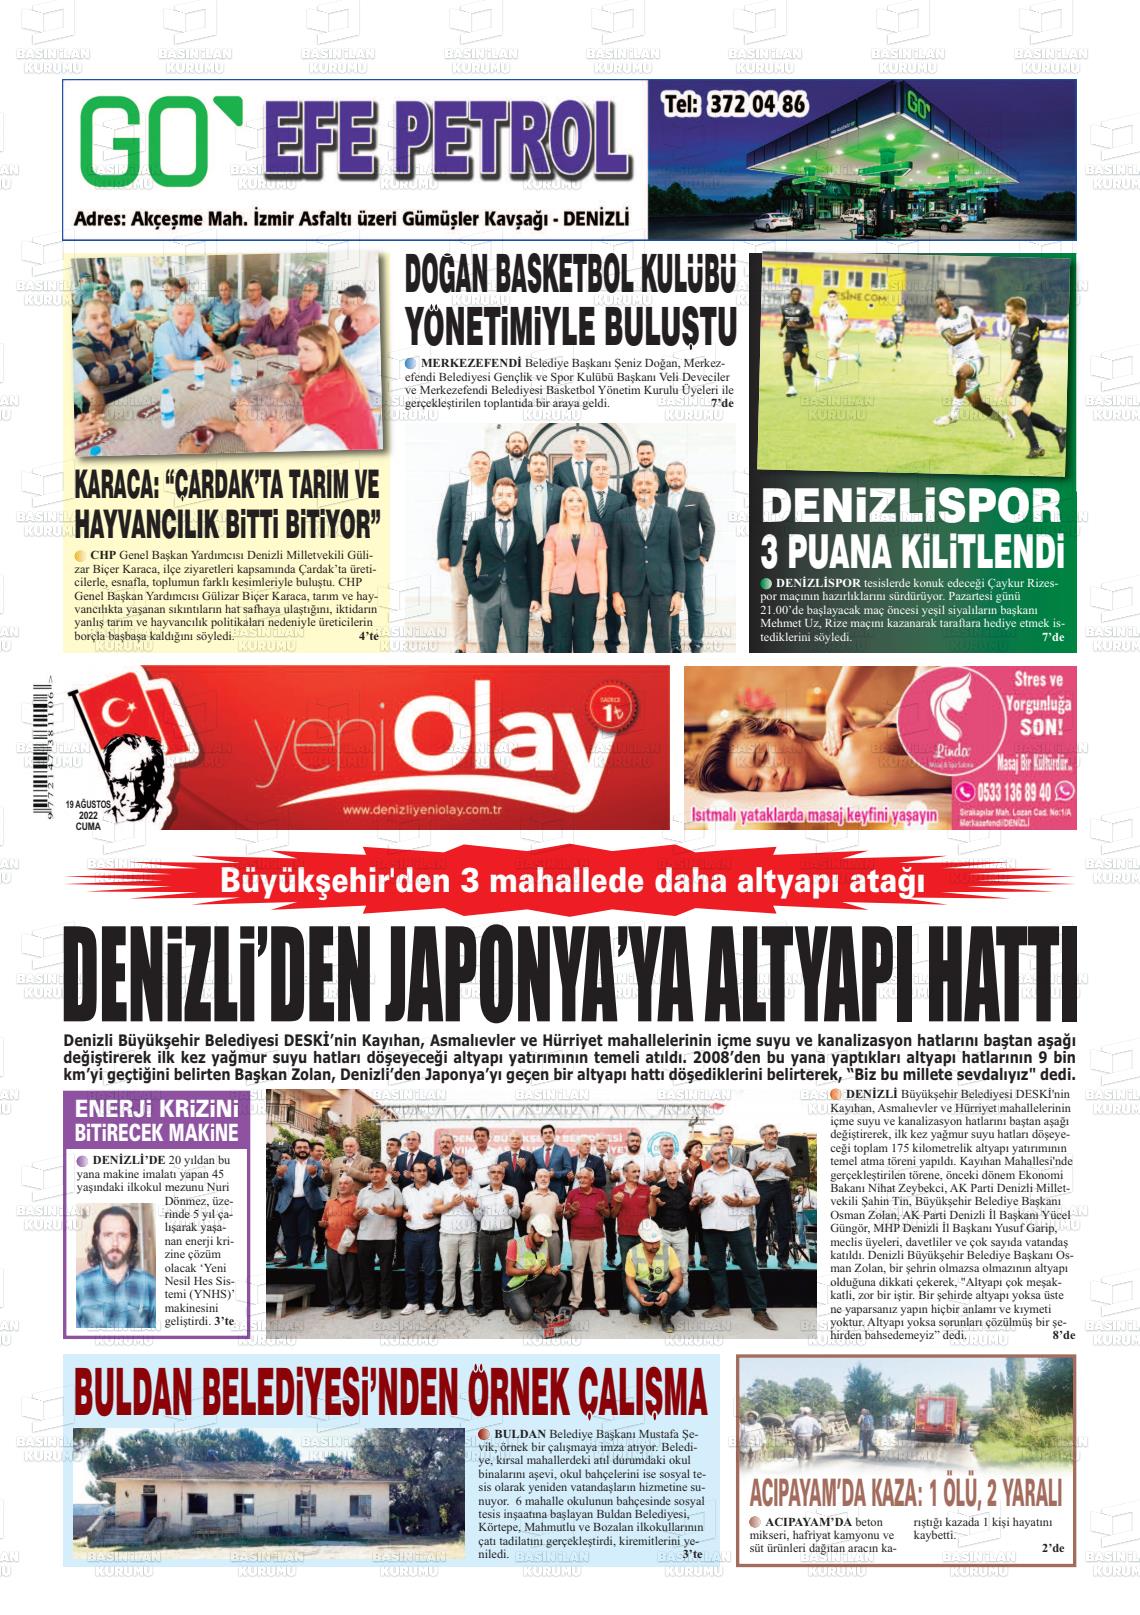 19 Ağustos 2022 Denizli Yeni Olay Gazete Manşeti